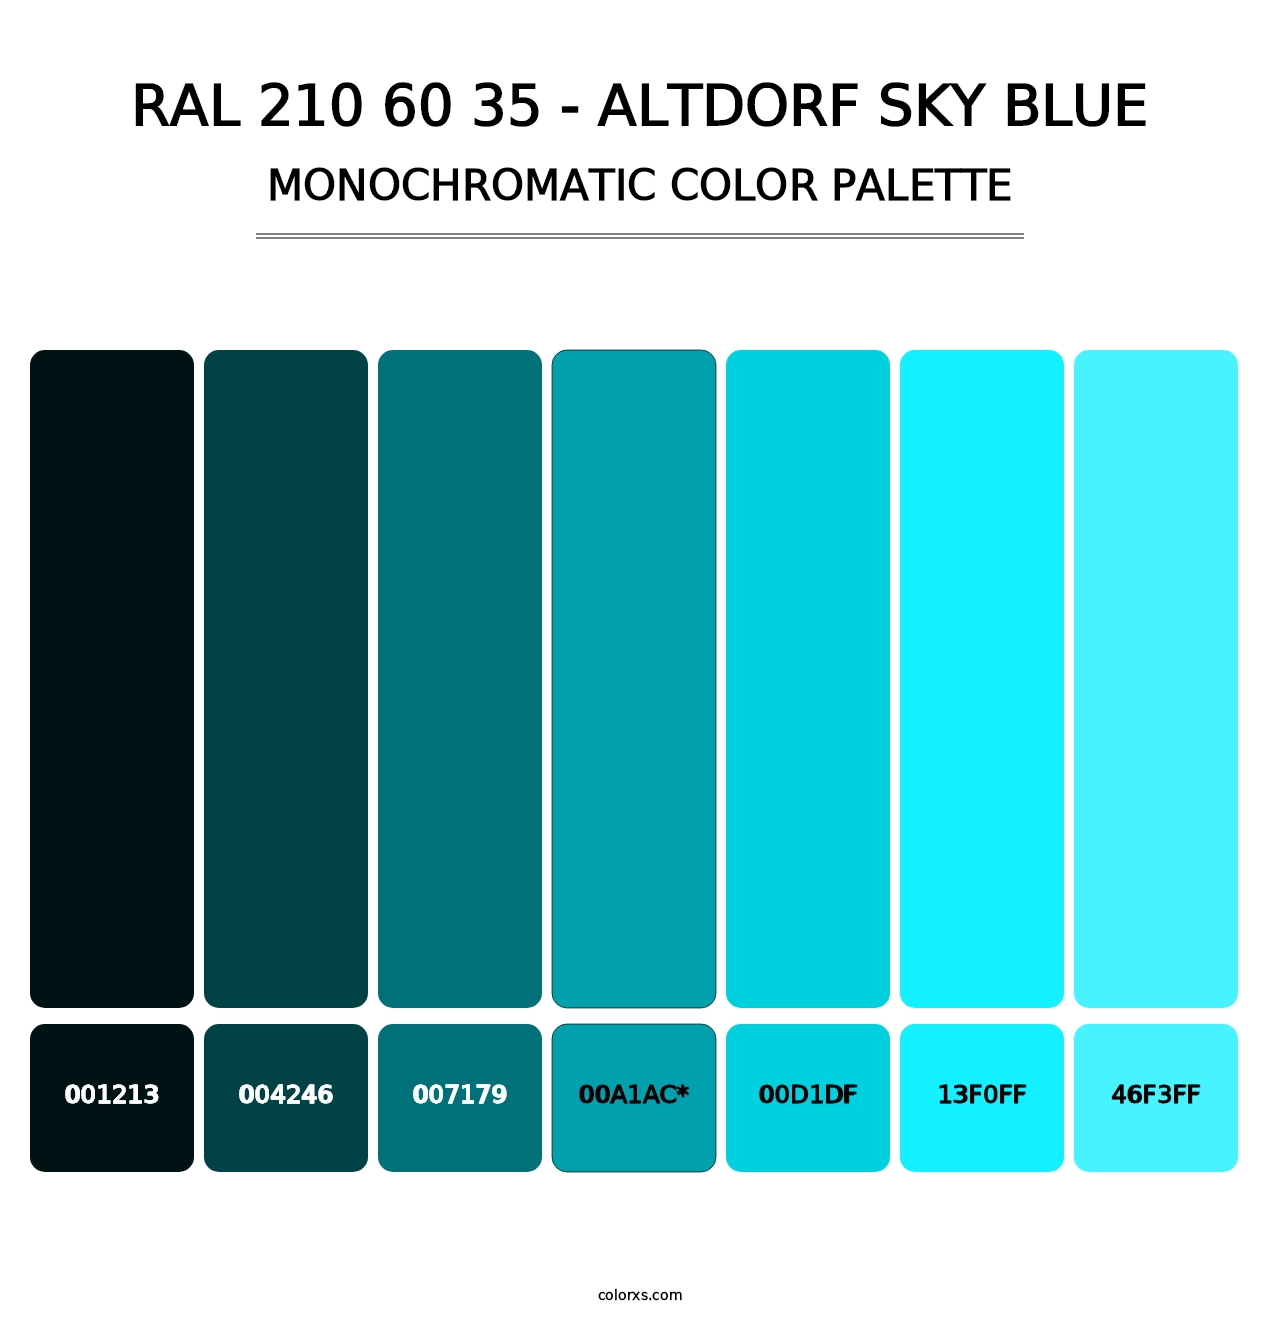 RAL 210 60 35 - Altdorf Sky Blue - Monochromatic Color Palette